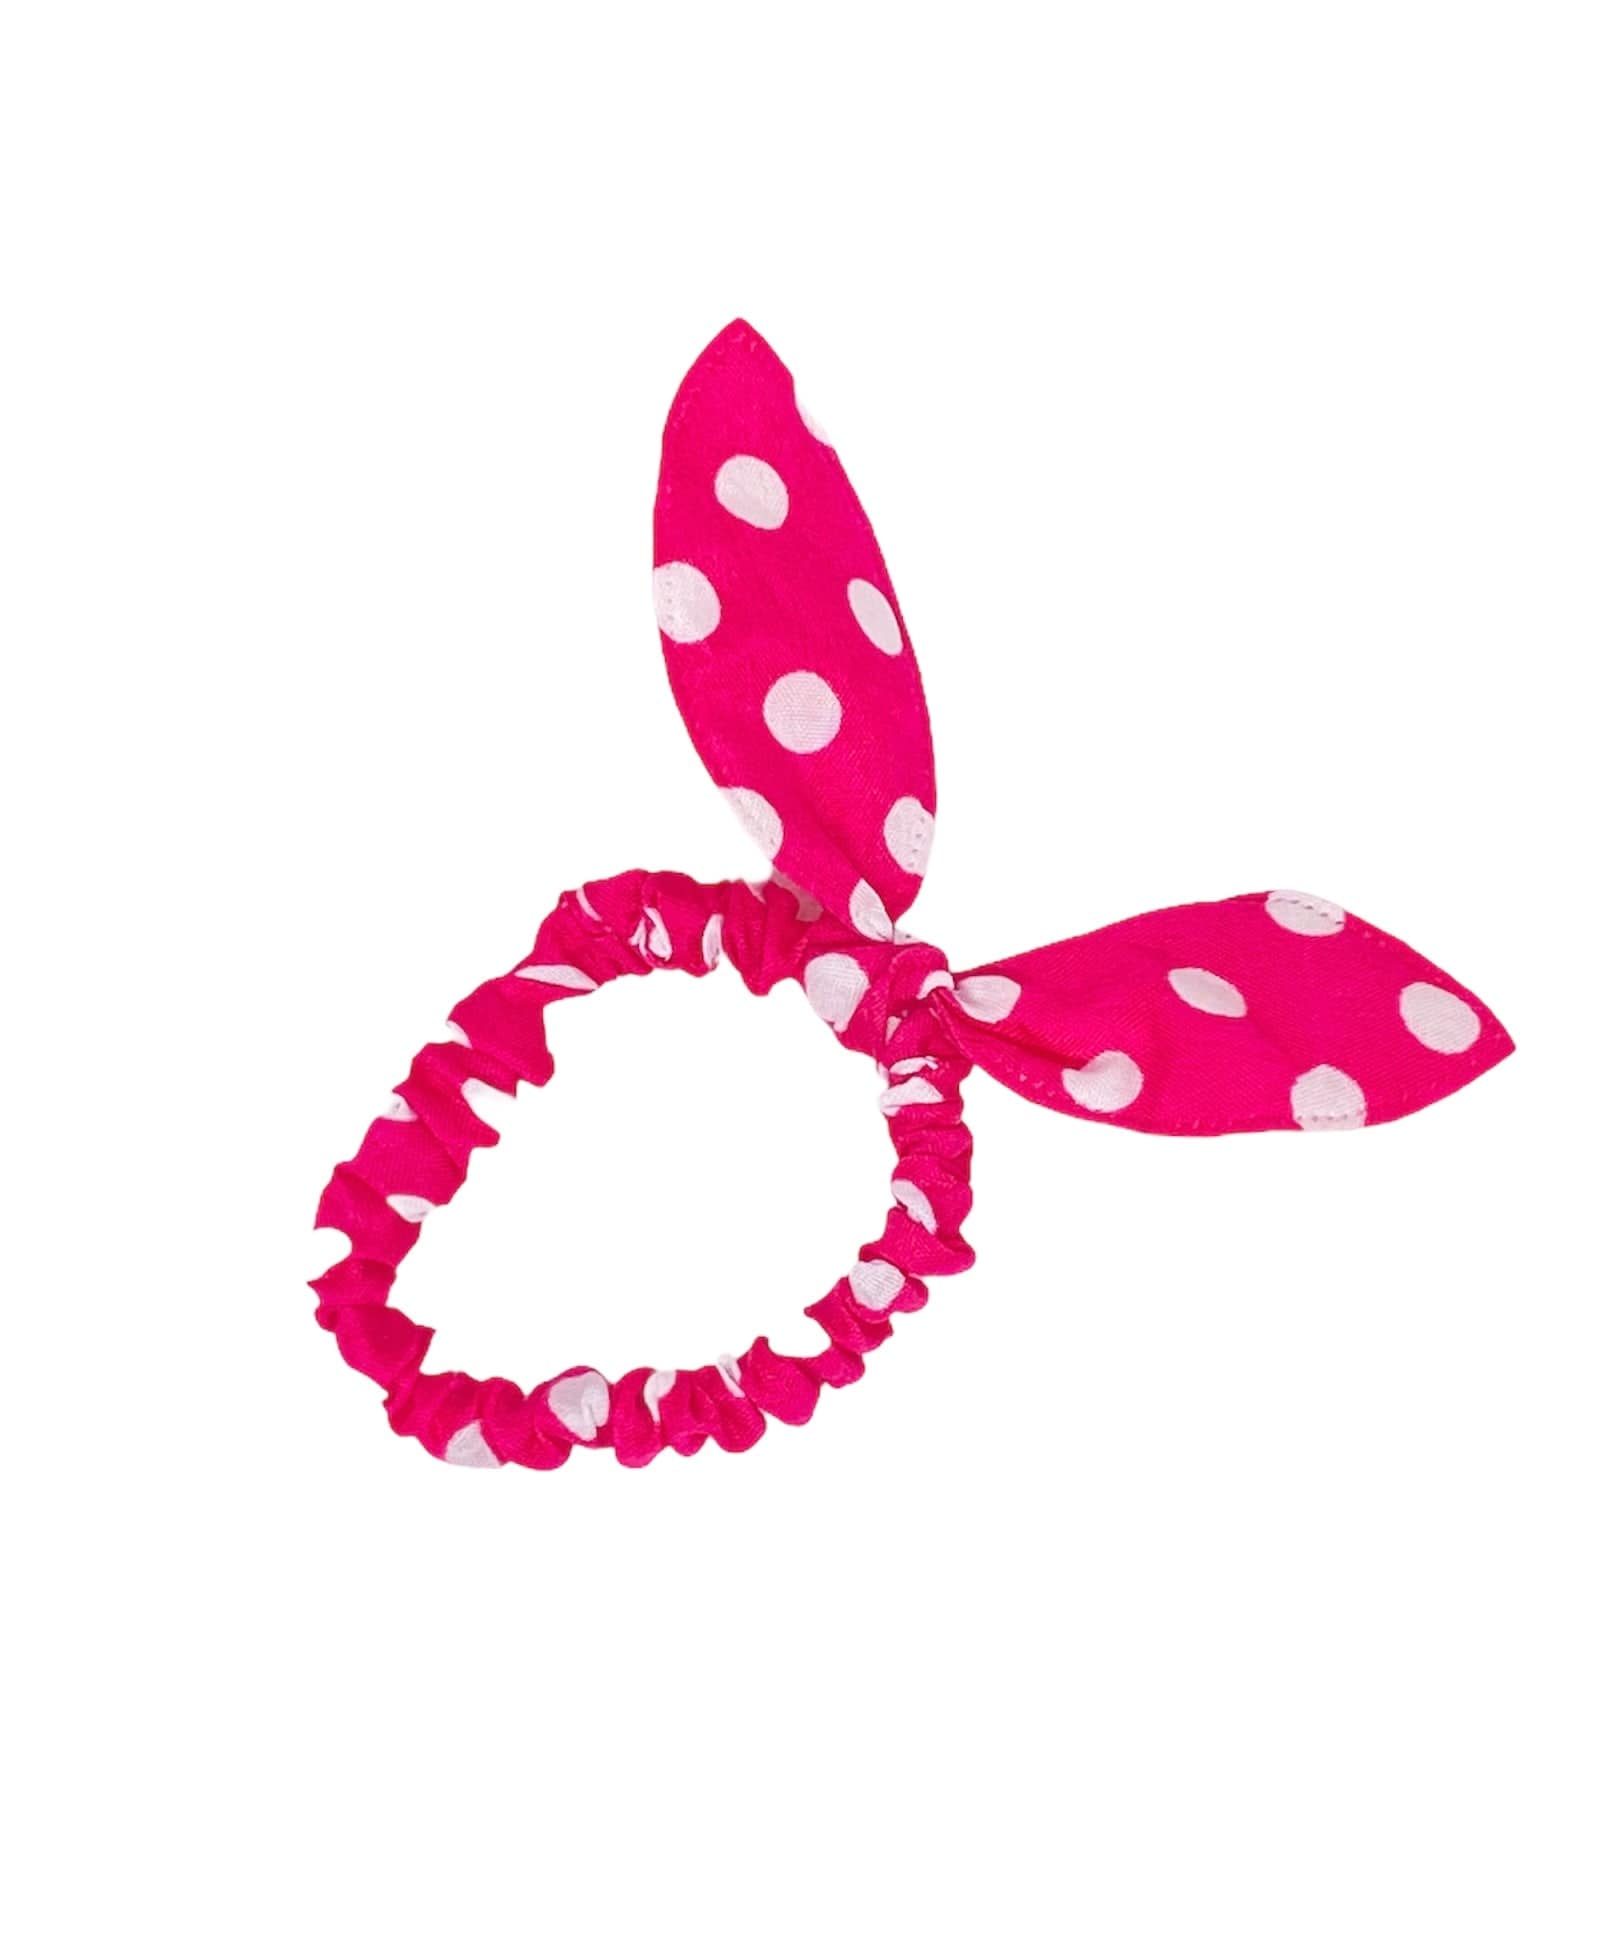 Scrunchies For Girls | Bunny Ear Hair Ties | Hair Ties For Girls and Women | Mommy and Me Hair Ties | Gifts for Girls